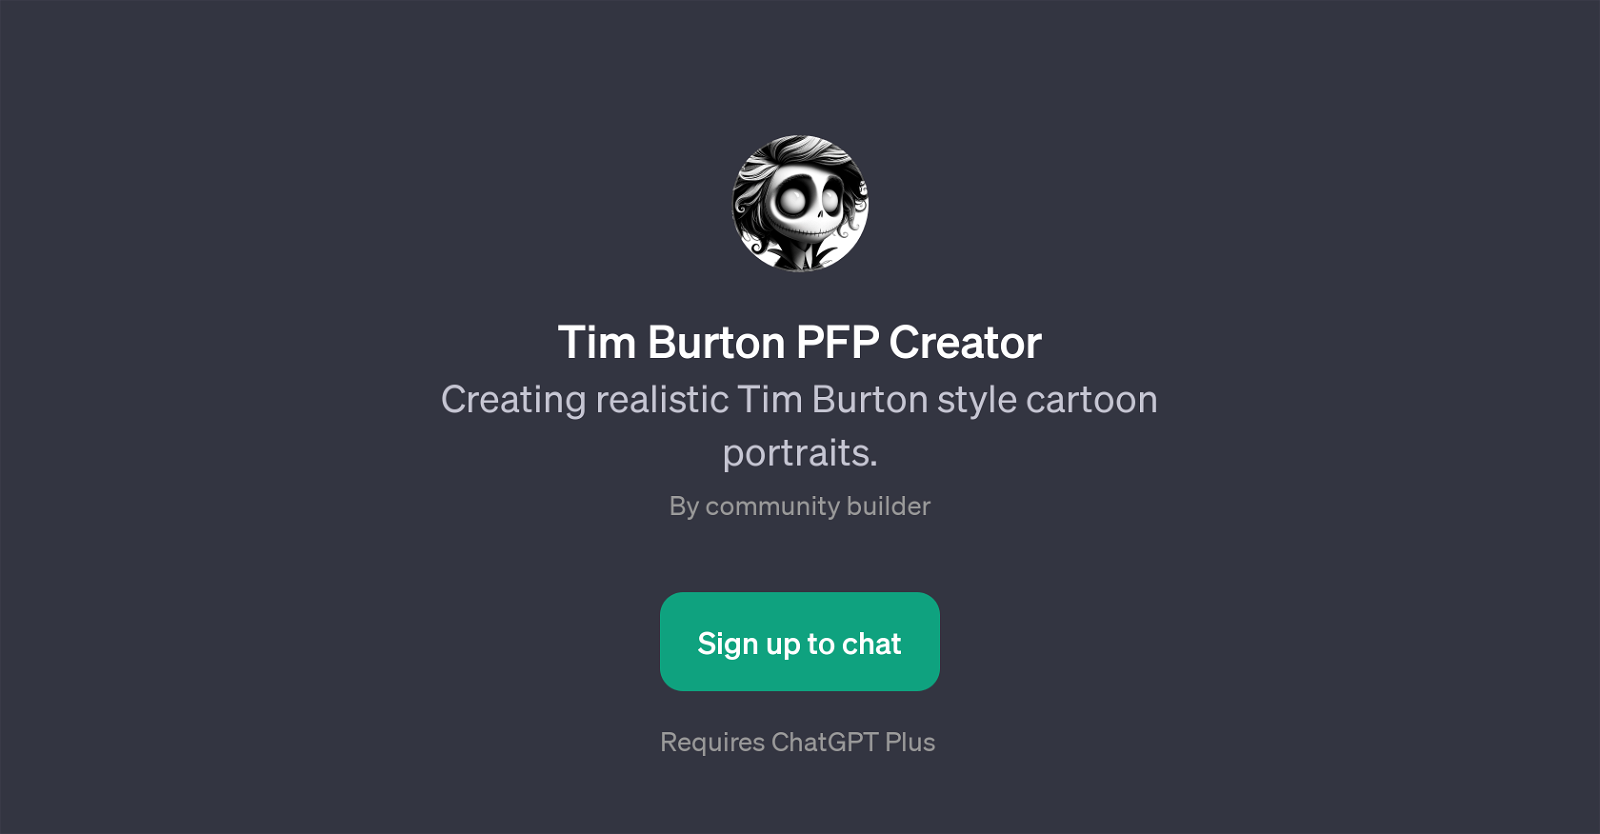 Tim Burton PFP Creator website